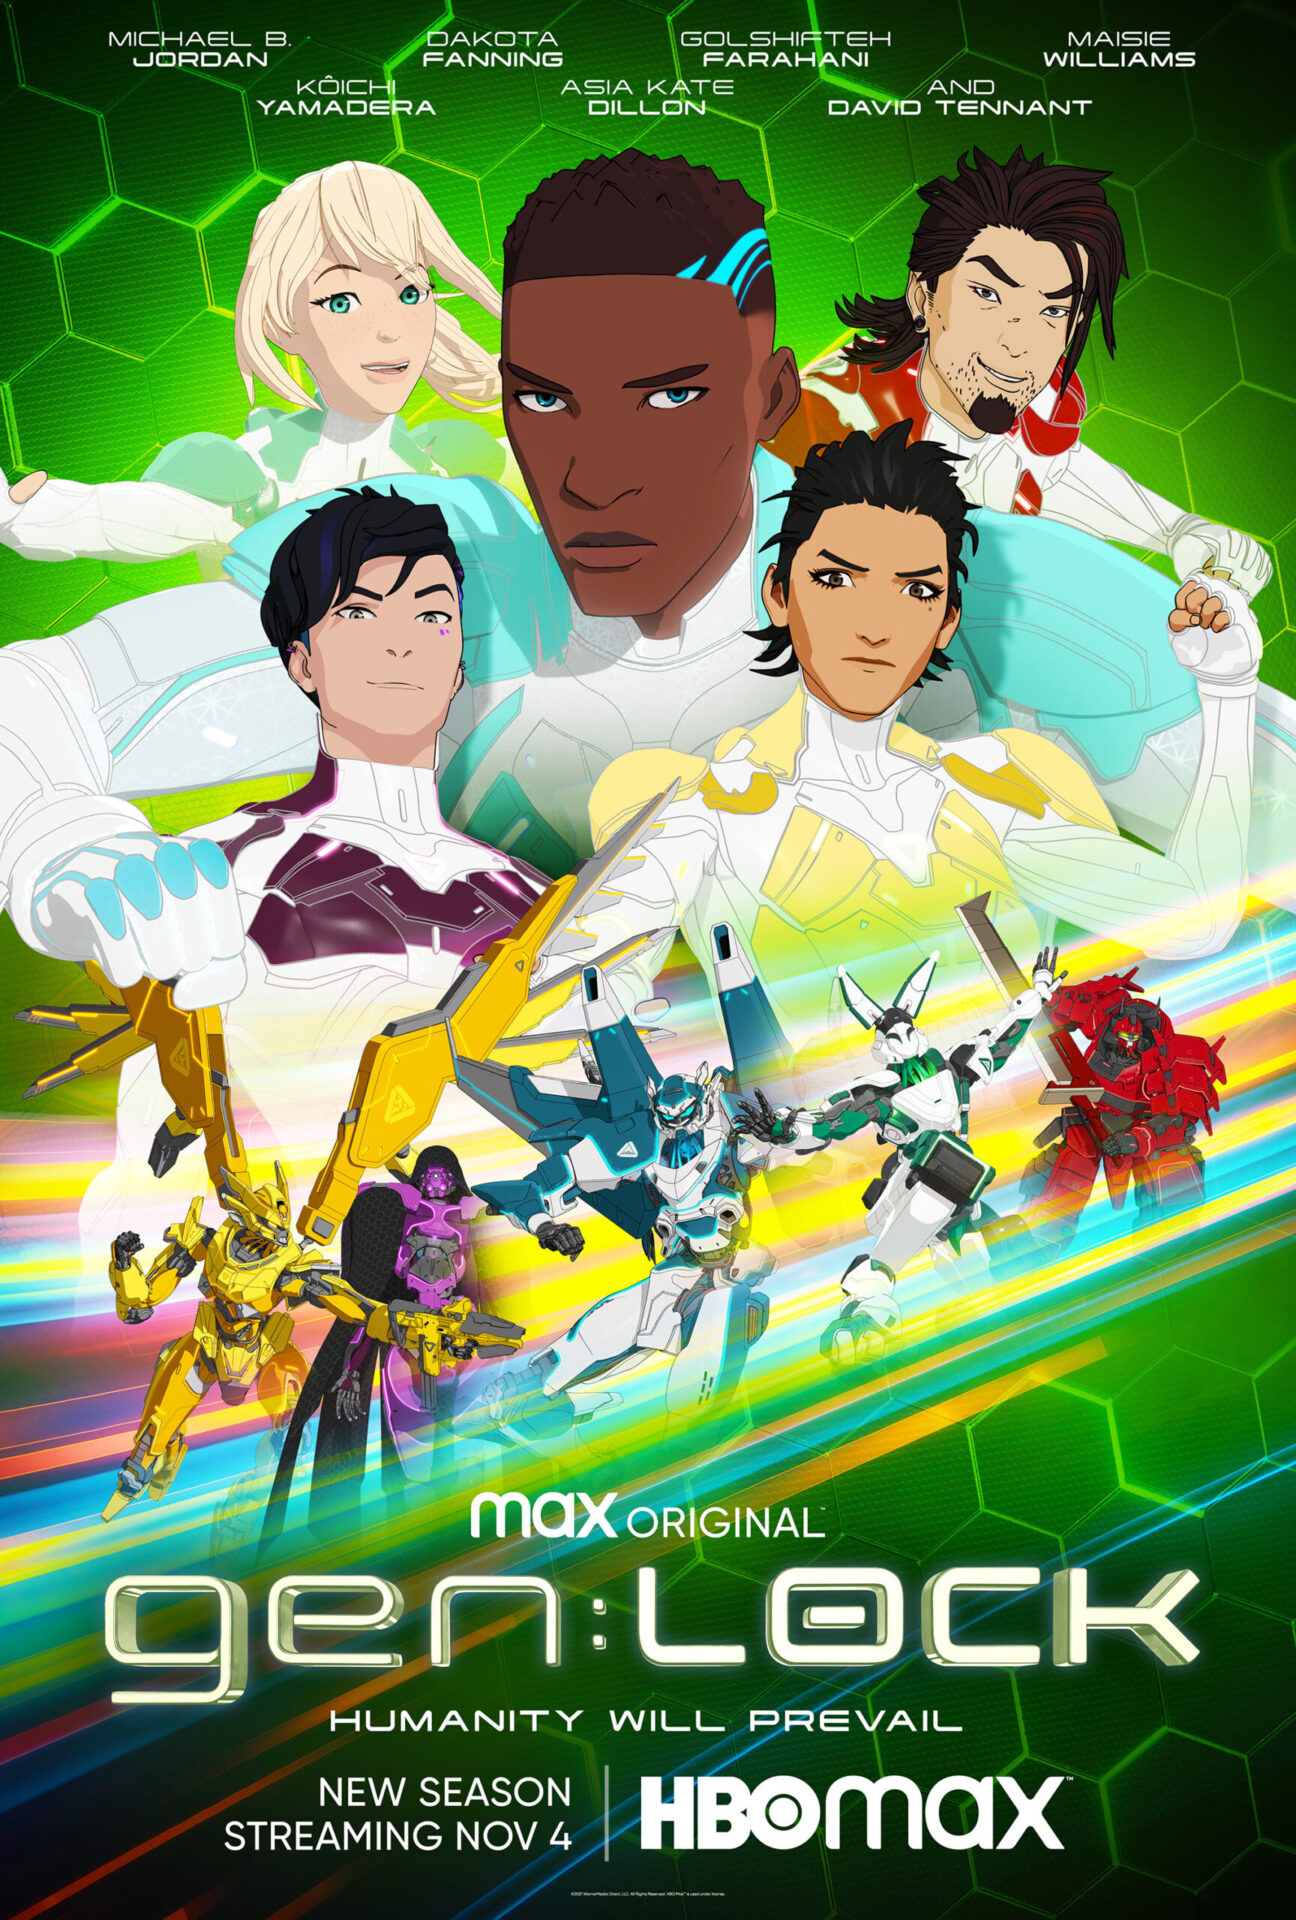 Season Two Of The Max Original Adult Animated Series GEN:LOCK Debuts November 4